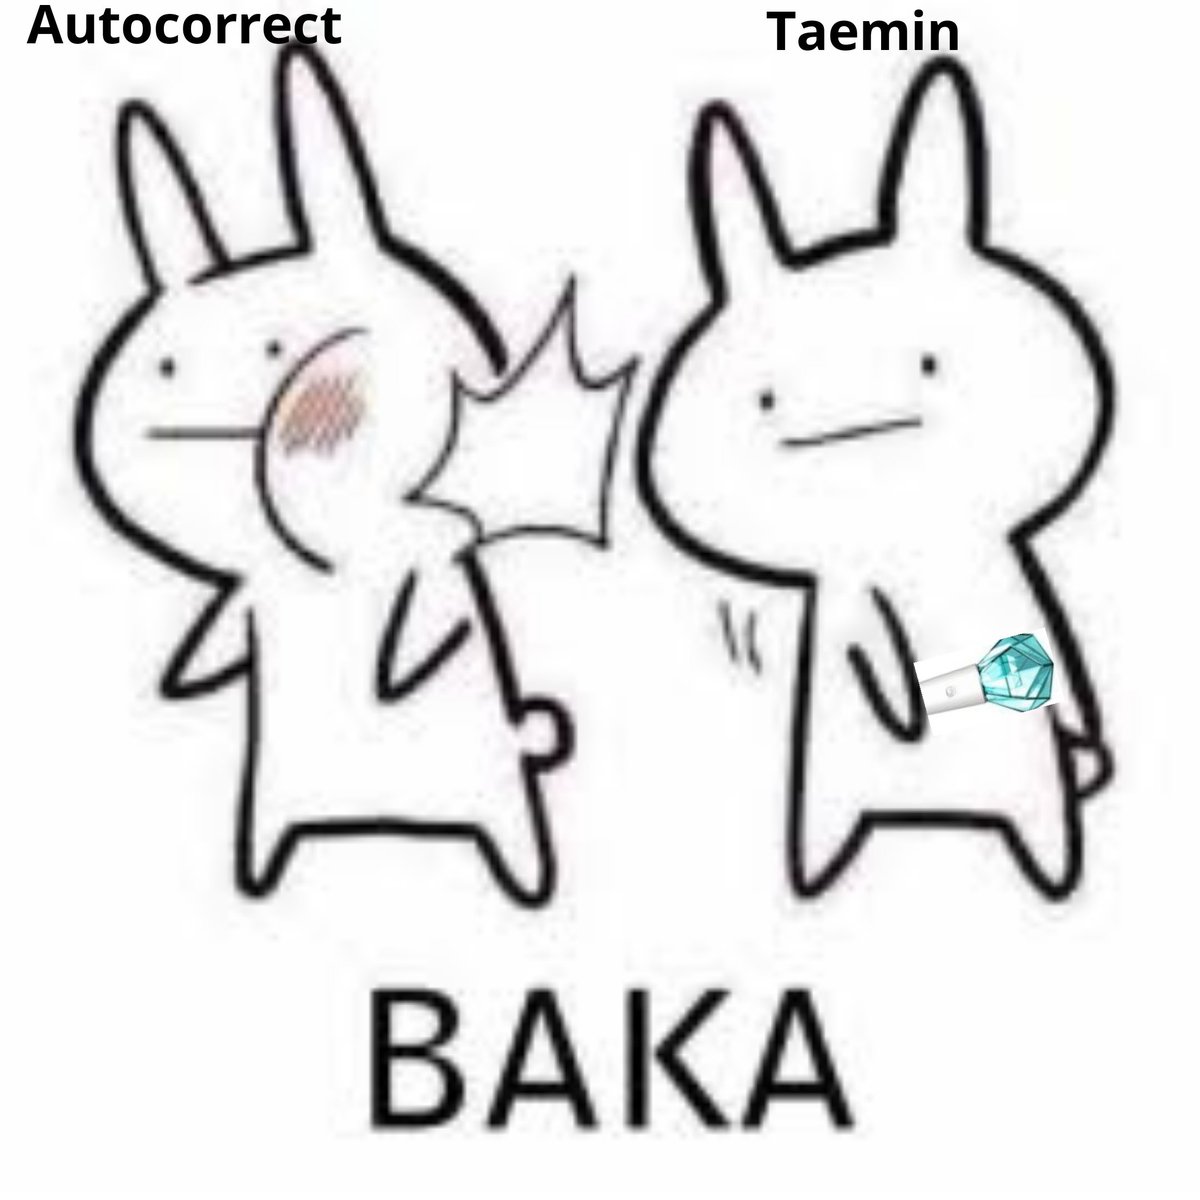 Taemin : types "shinee"Autocorrect : changes it to "shiny"